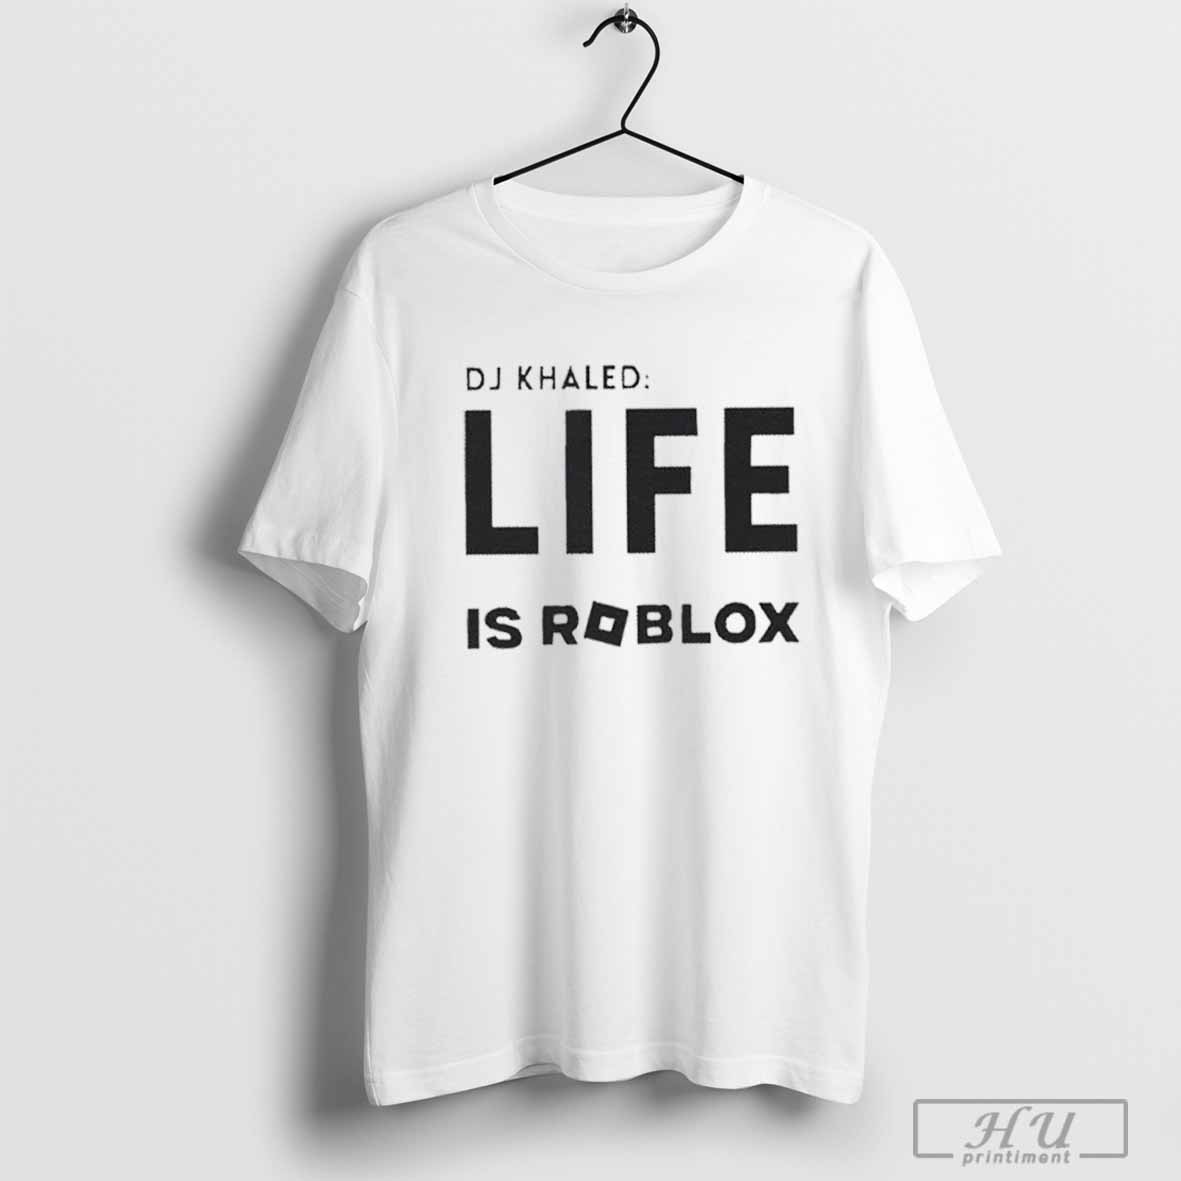 Roblox t shirt in 2022, Roblox t shirts, Roblox t-shirt, Free t shirt  design